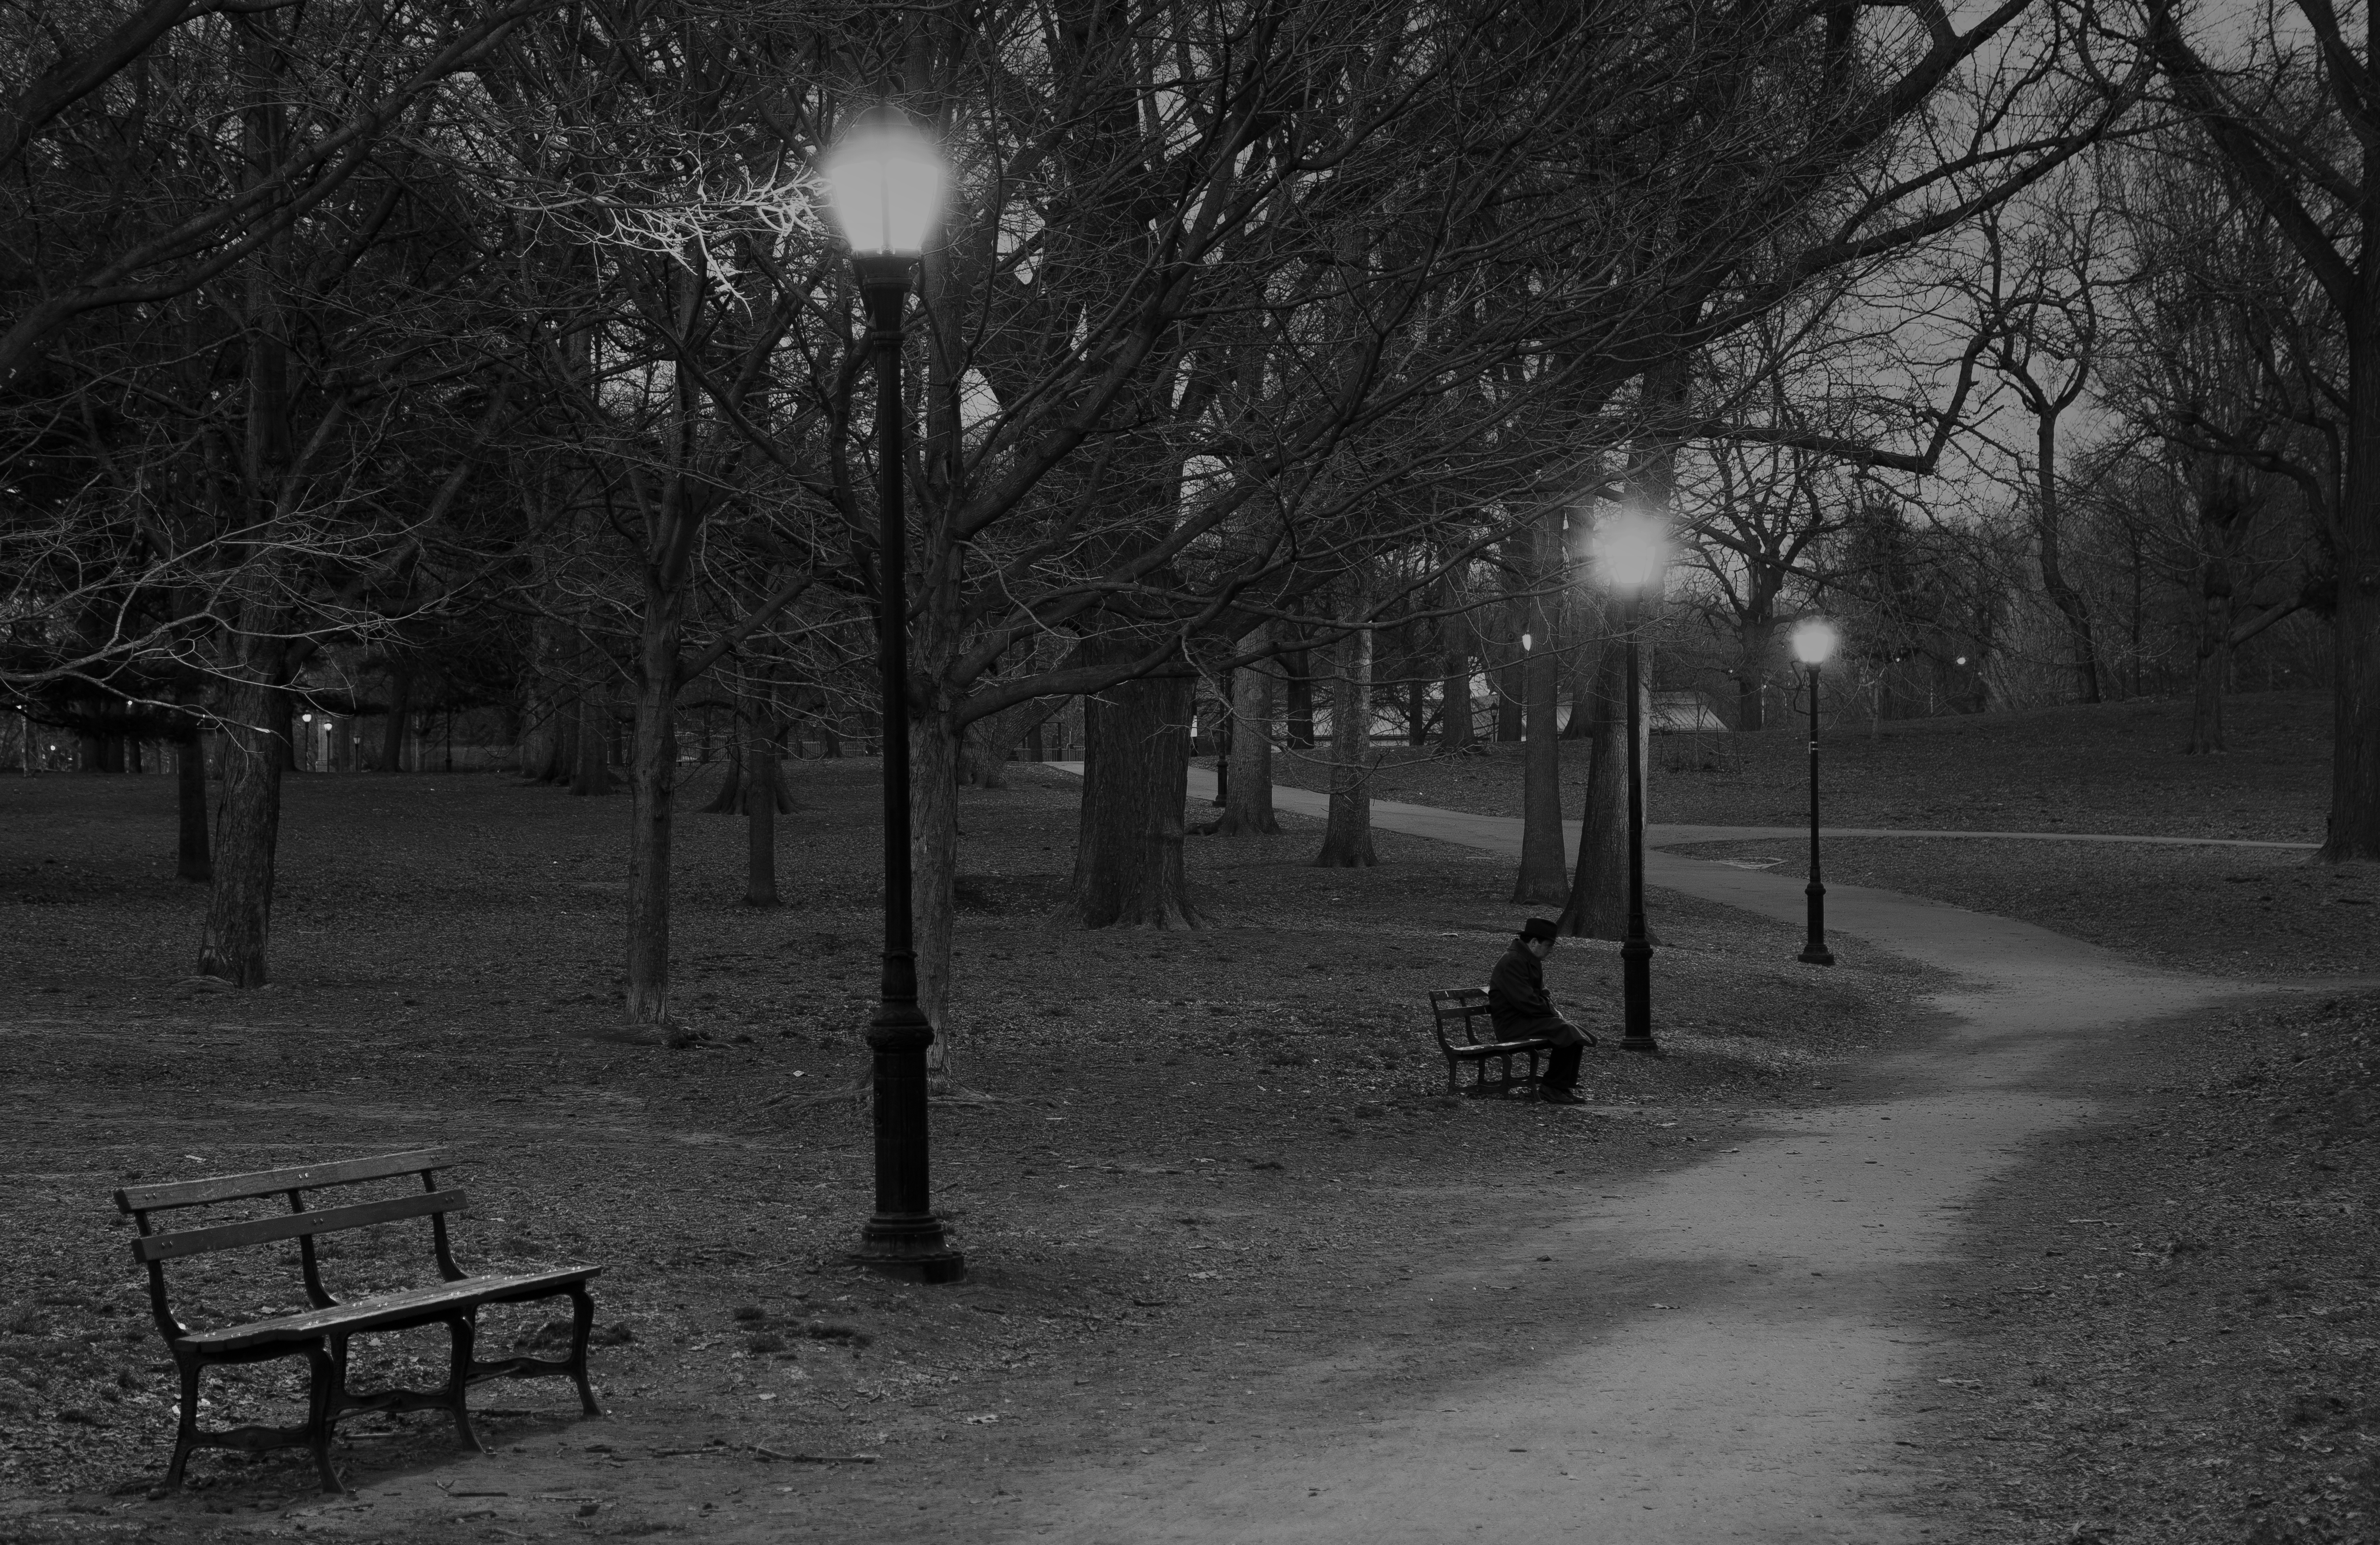 File:Man Sitting Alone in Park.jpg - Wikimedia Commons